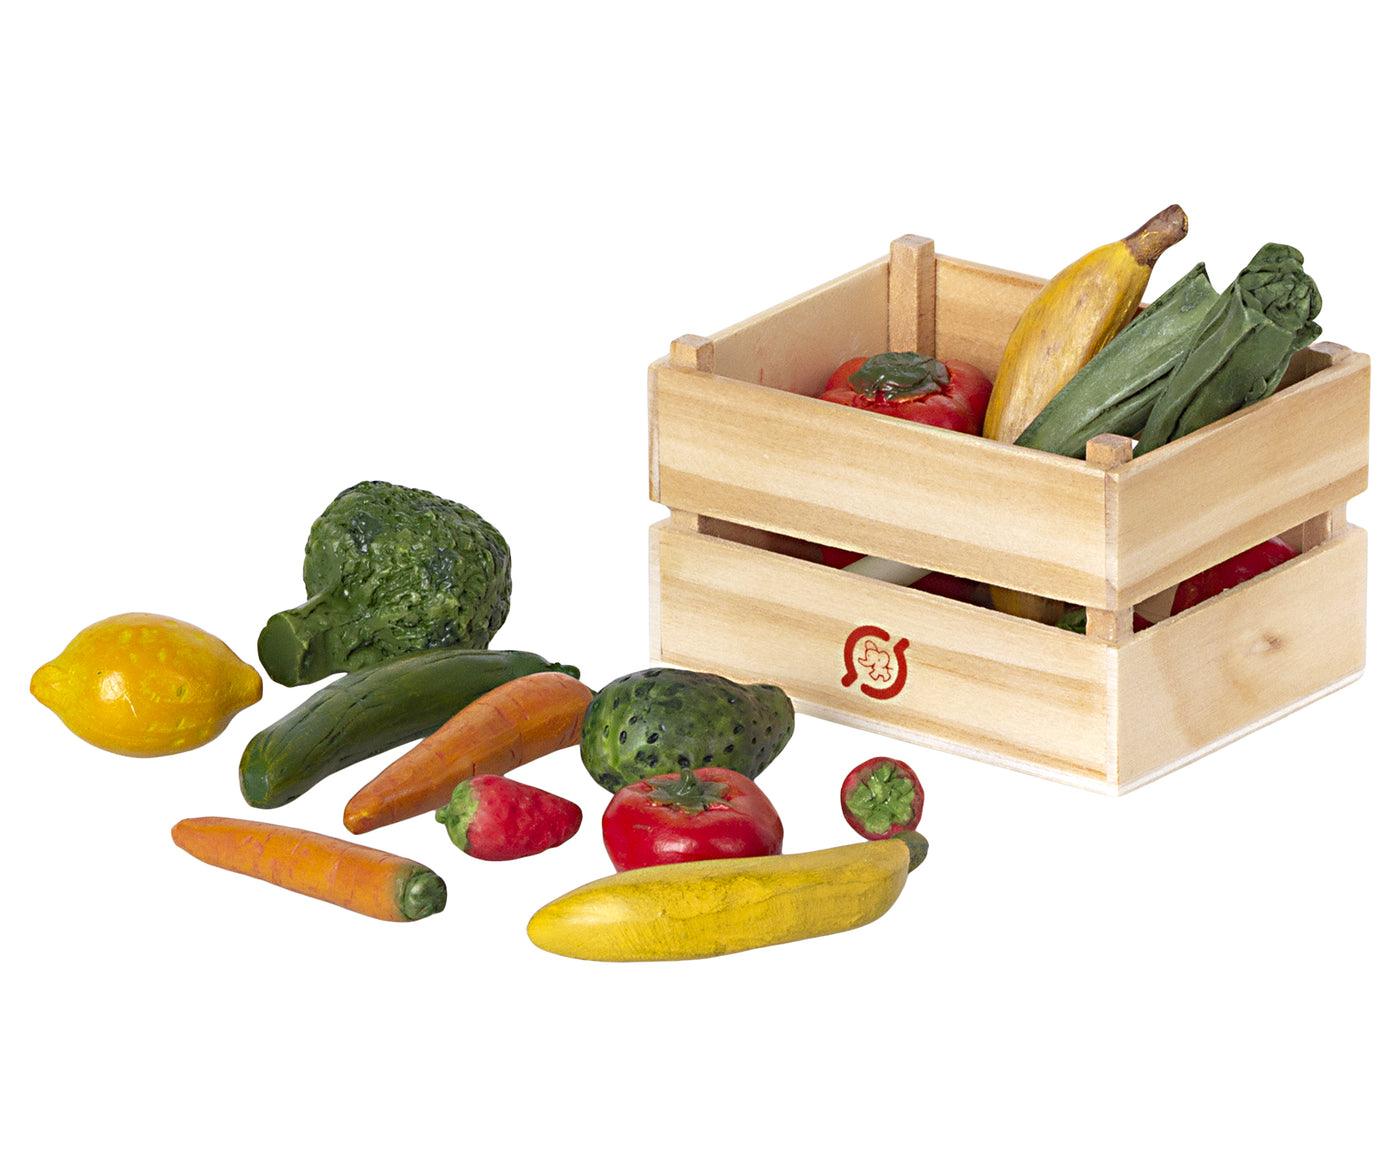 Veggies & Fruits in box